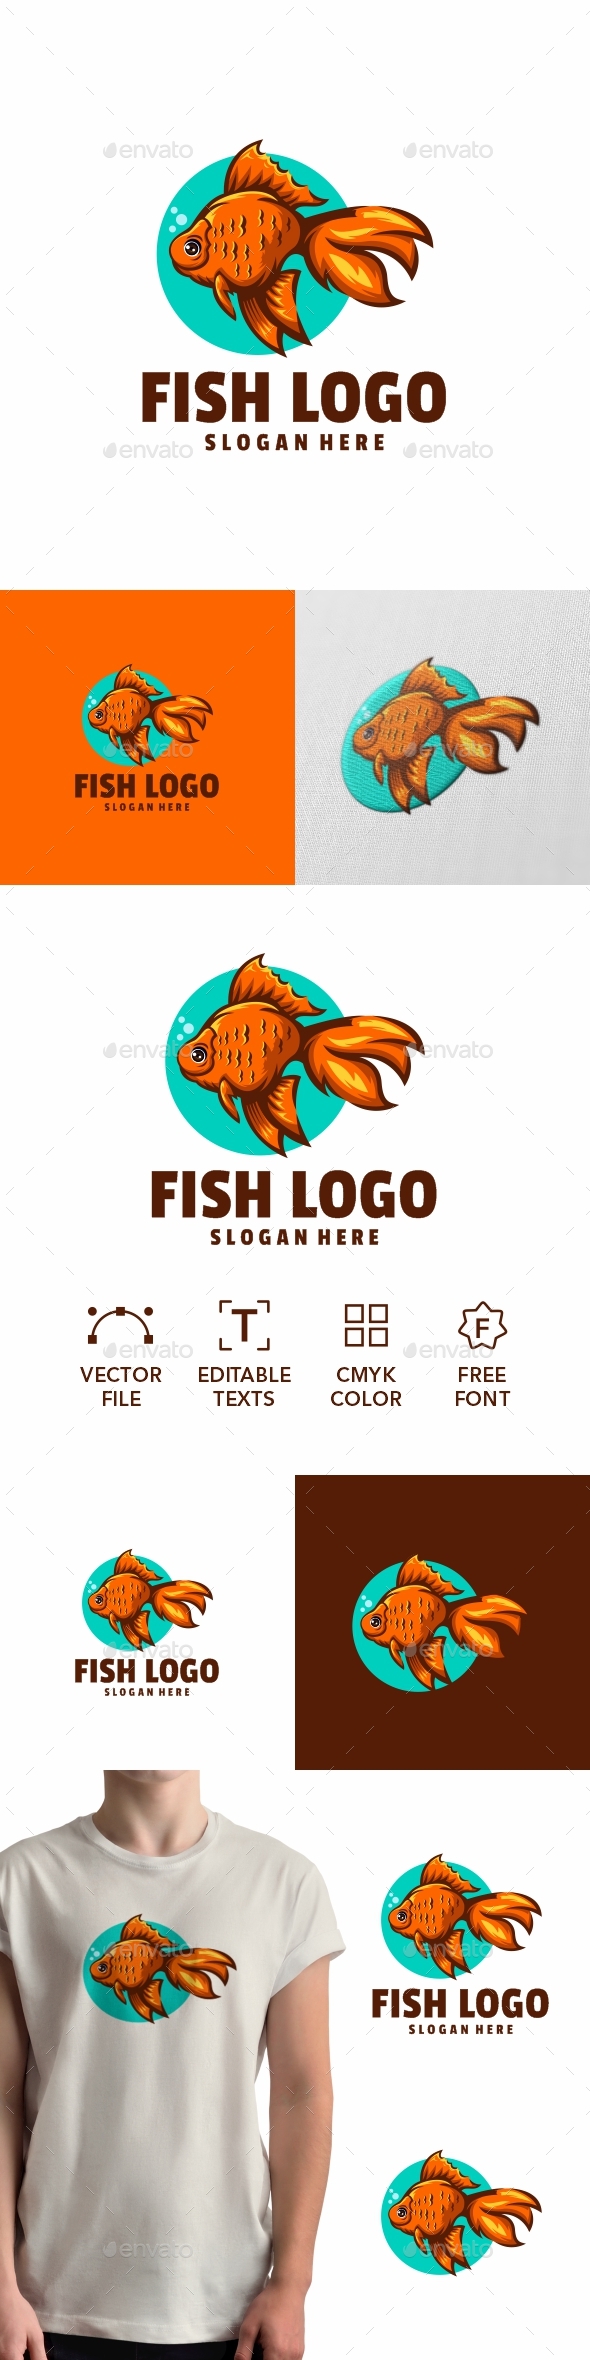 [DOWNLOAD]fish logo design